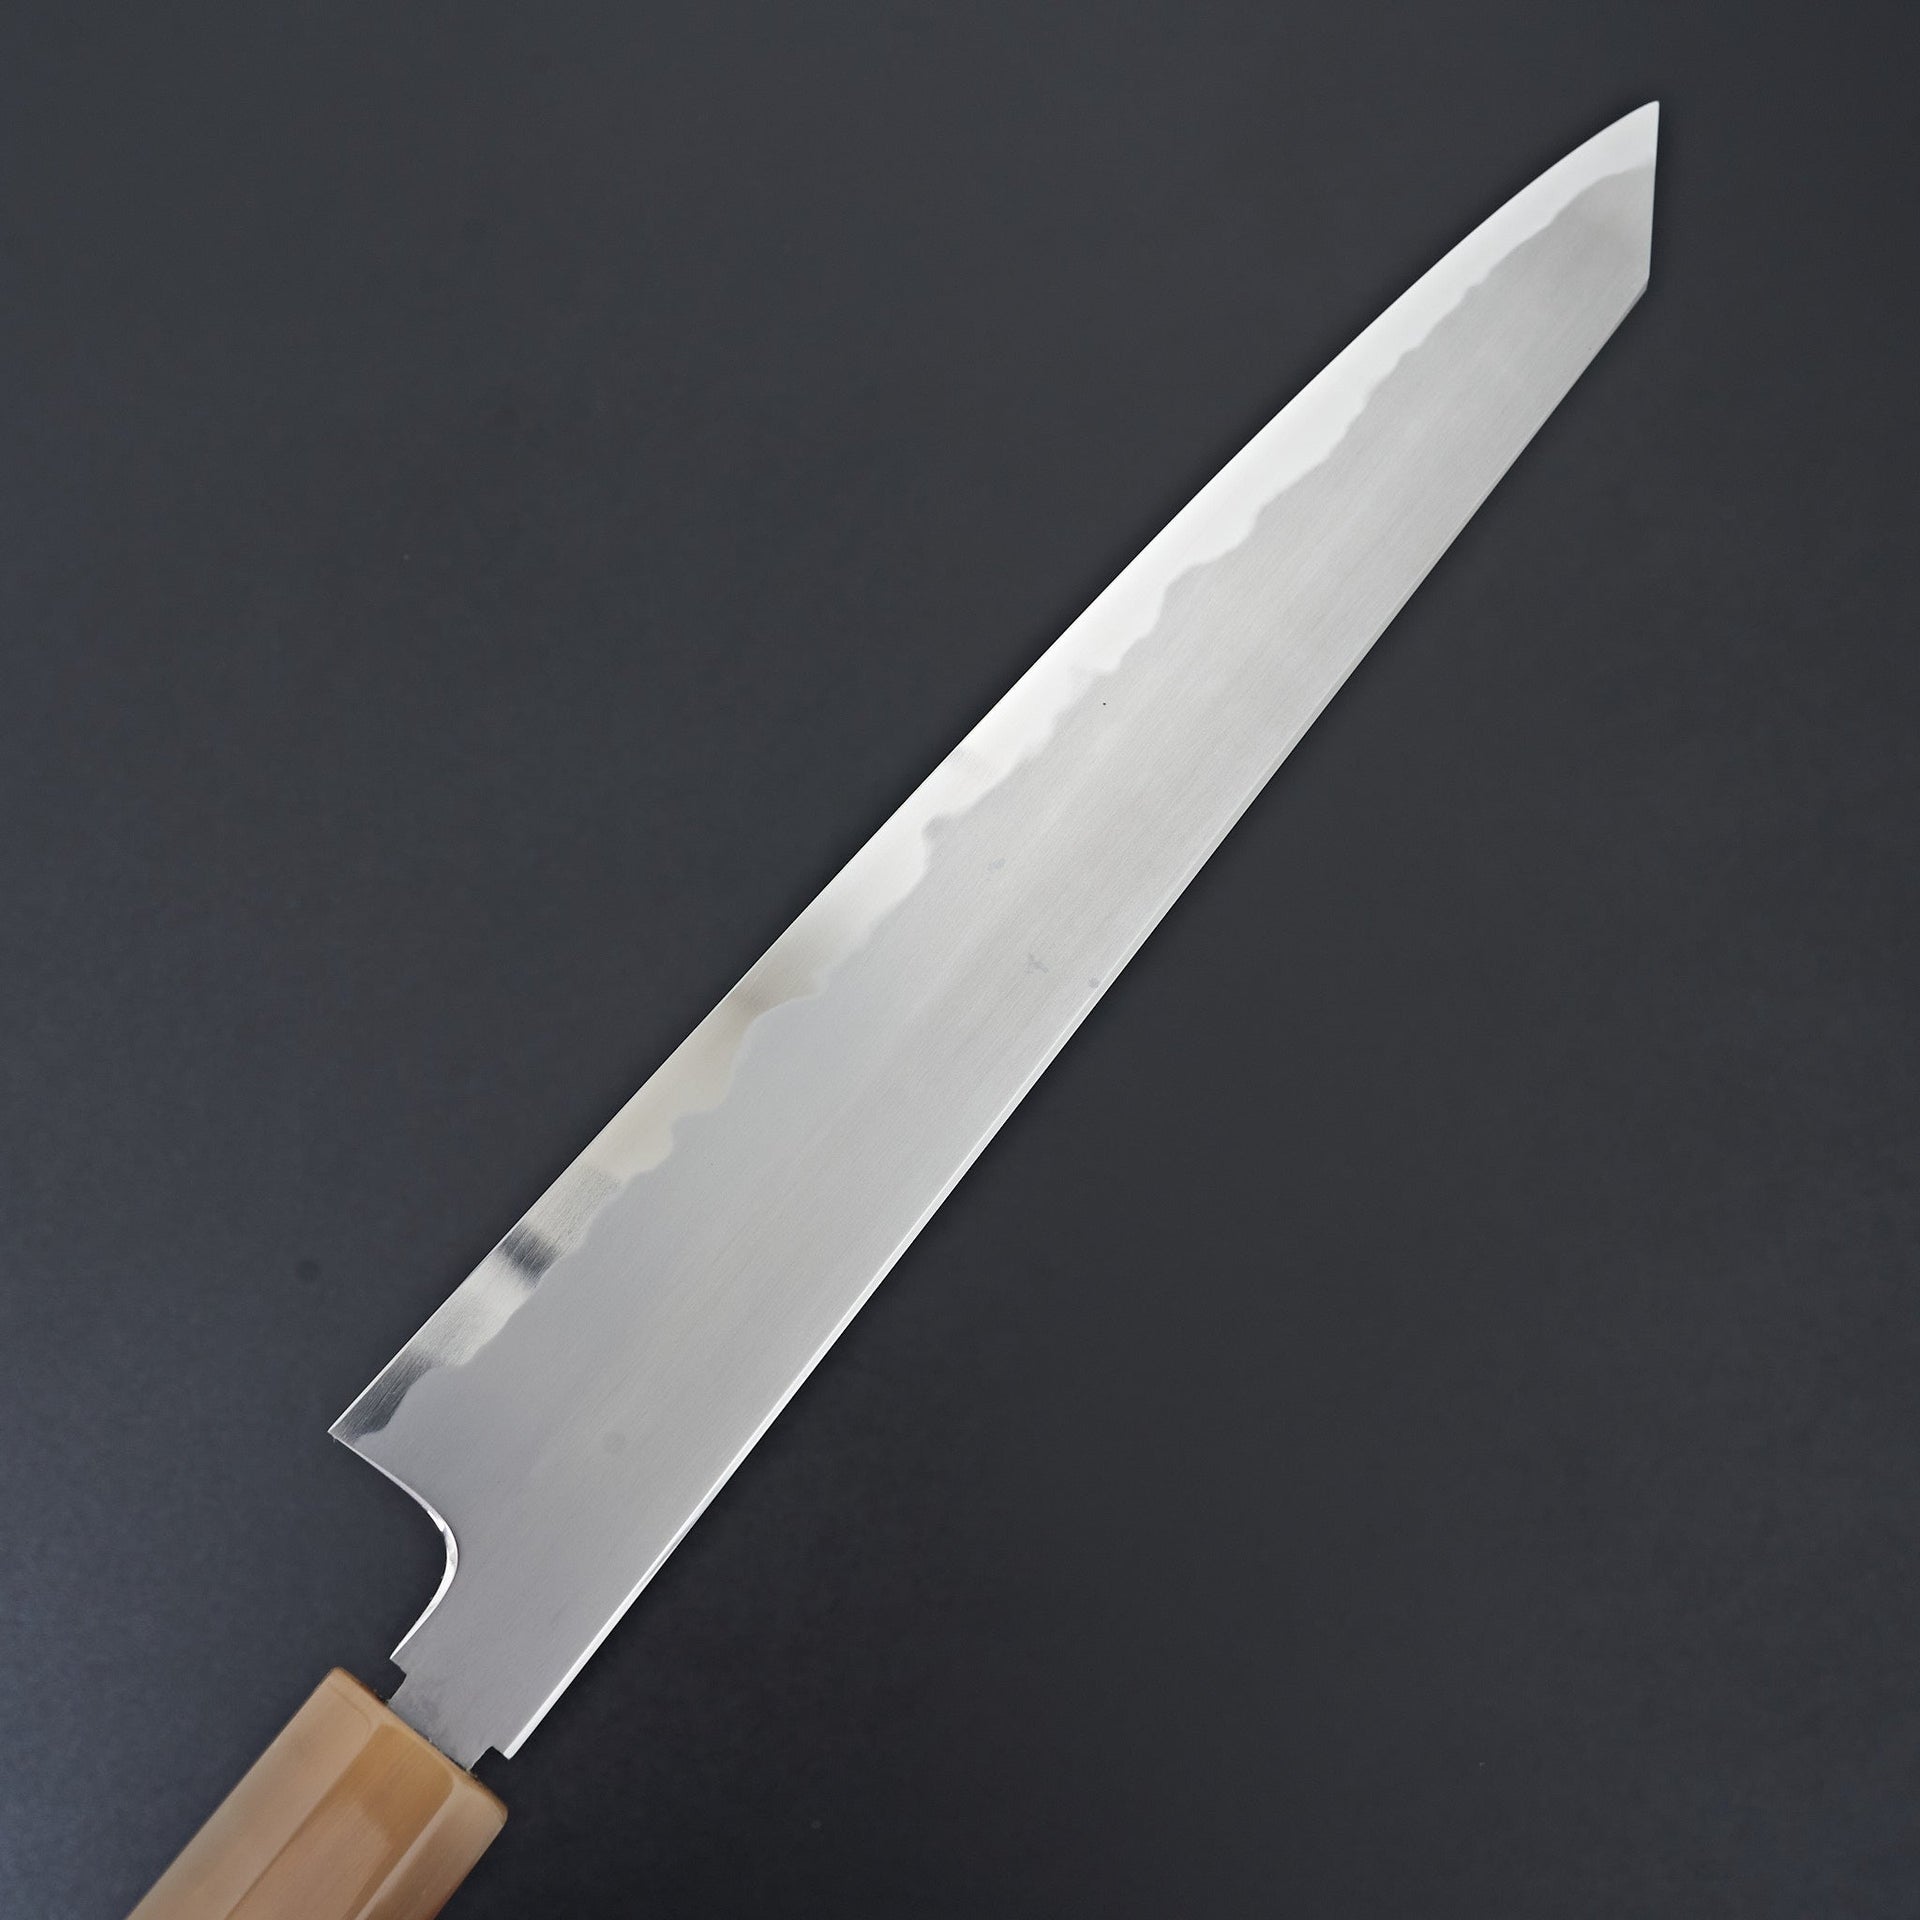 Tetsujin Blue #2 Kasumi Kiritsuke Sujihiki 270mm Ho Wood Handle-Knife-Hitohira-Carbon Knife Co